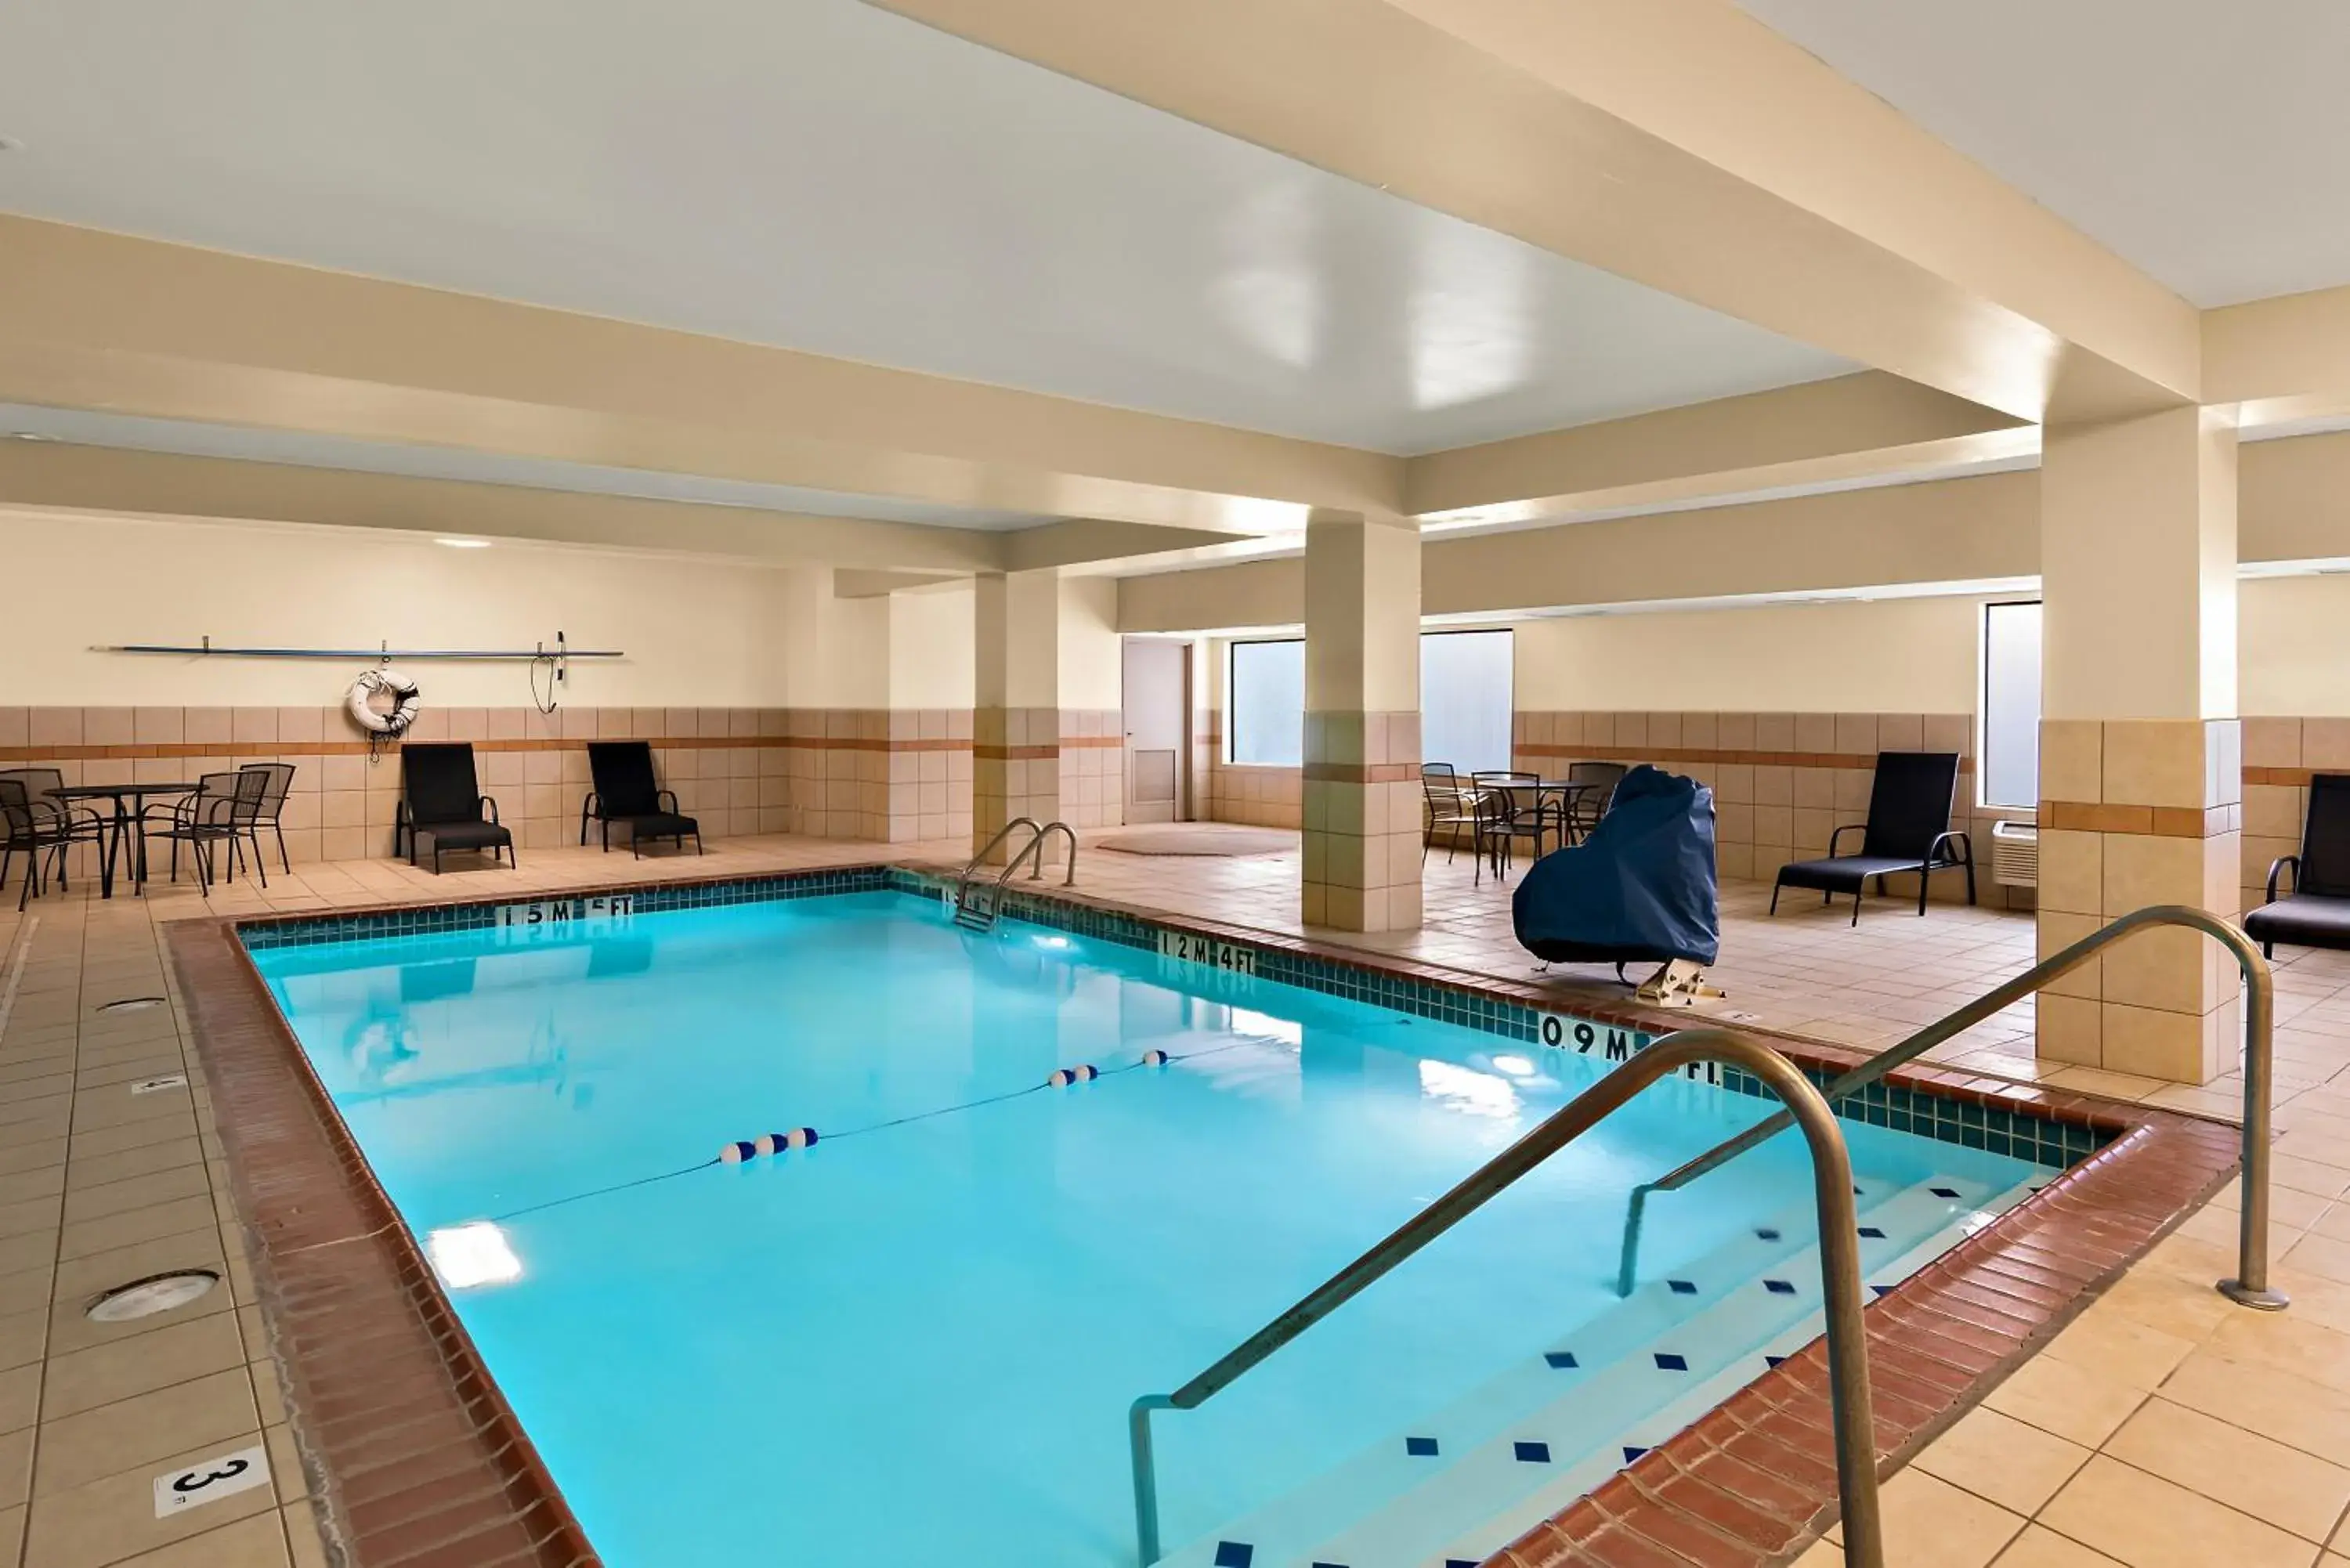 Swimming Pool in Quality Inn Memphis Northeast near I-40